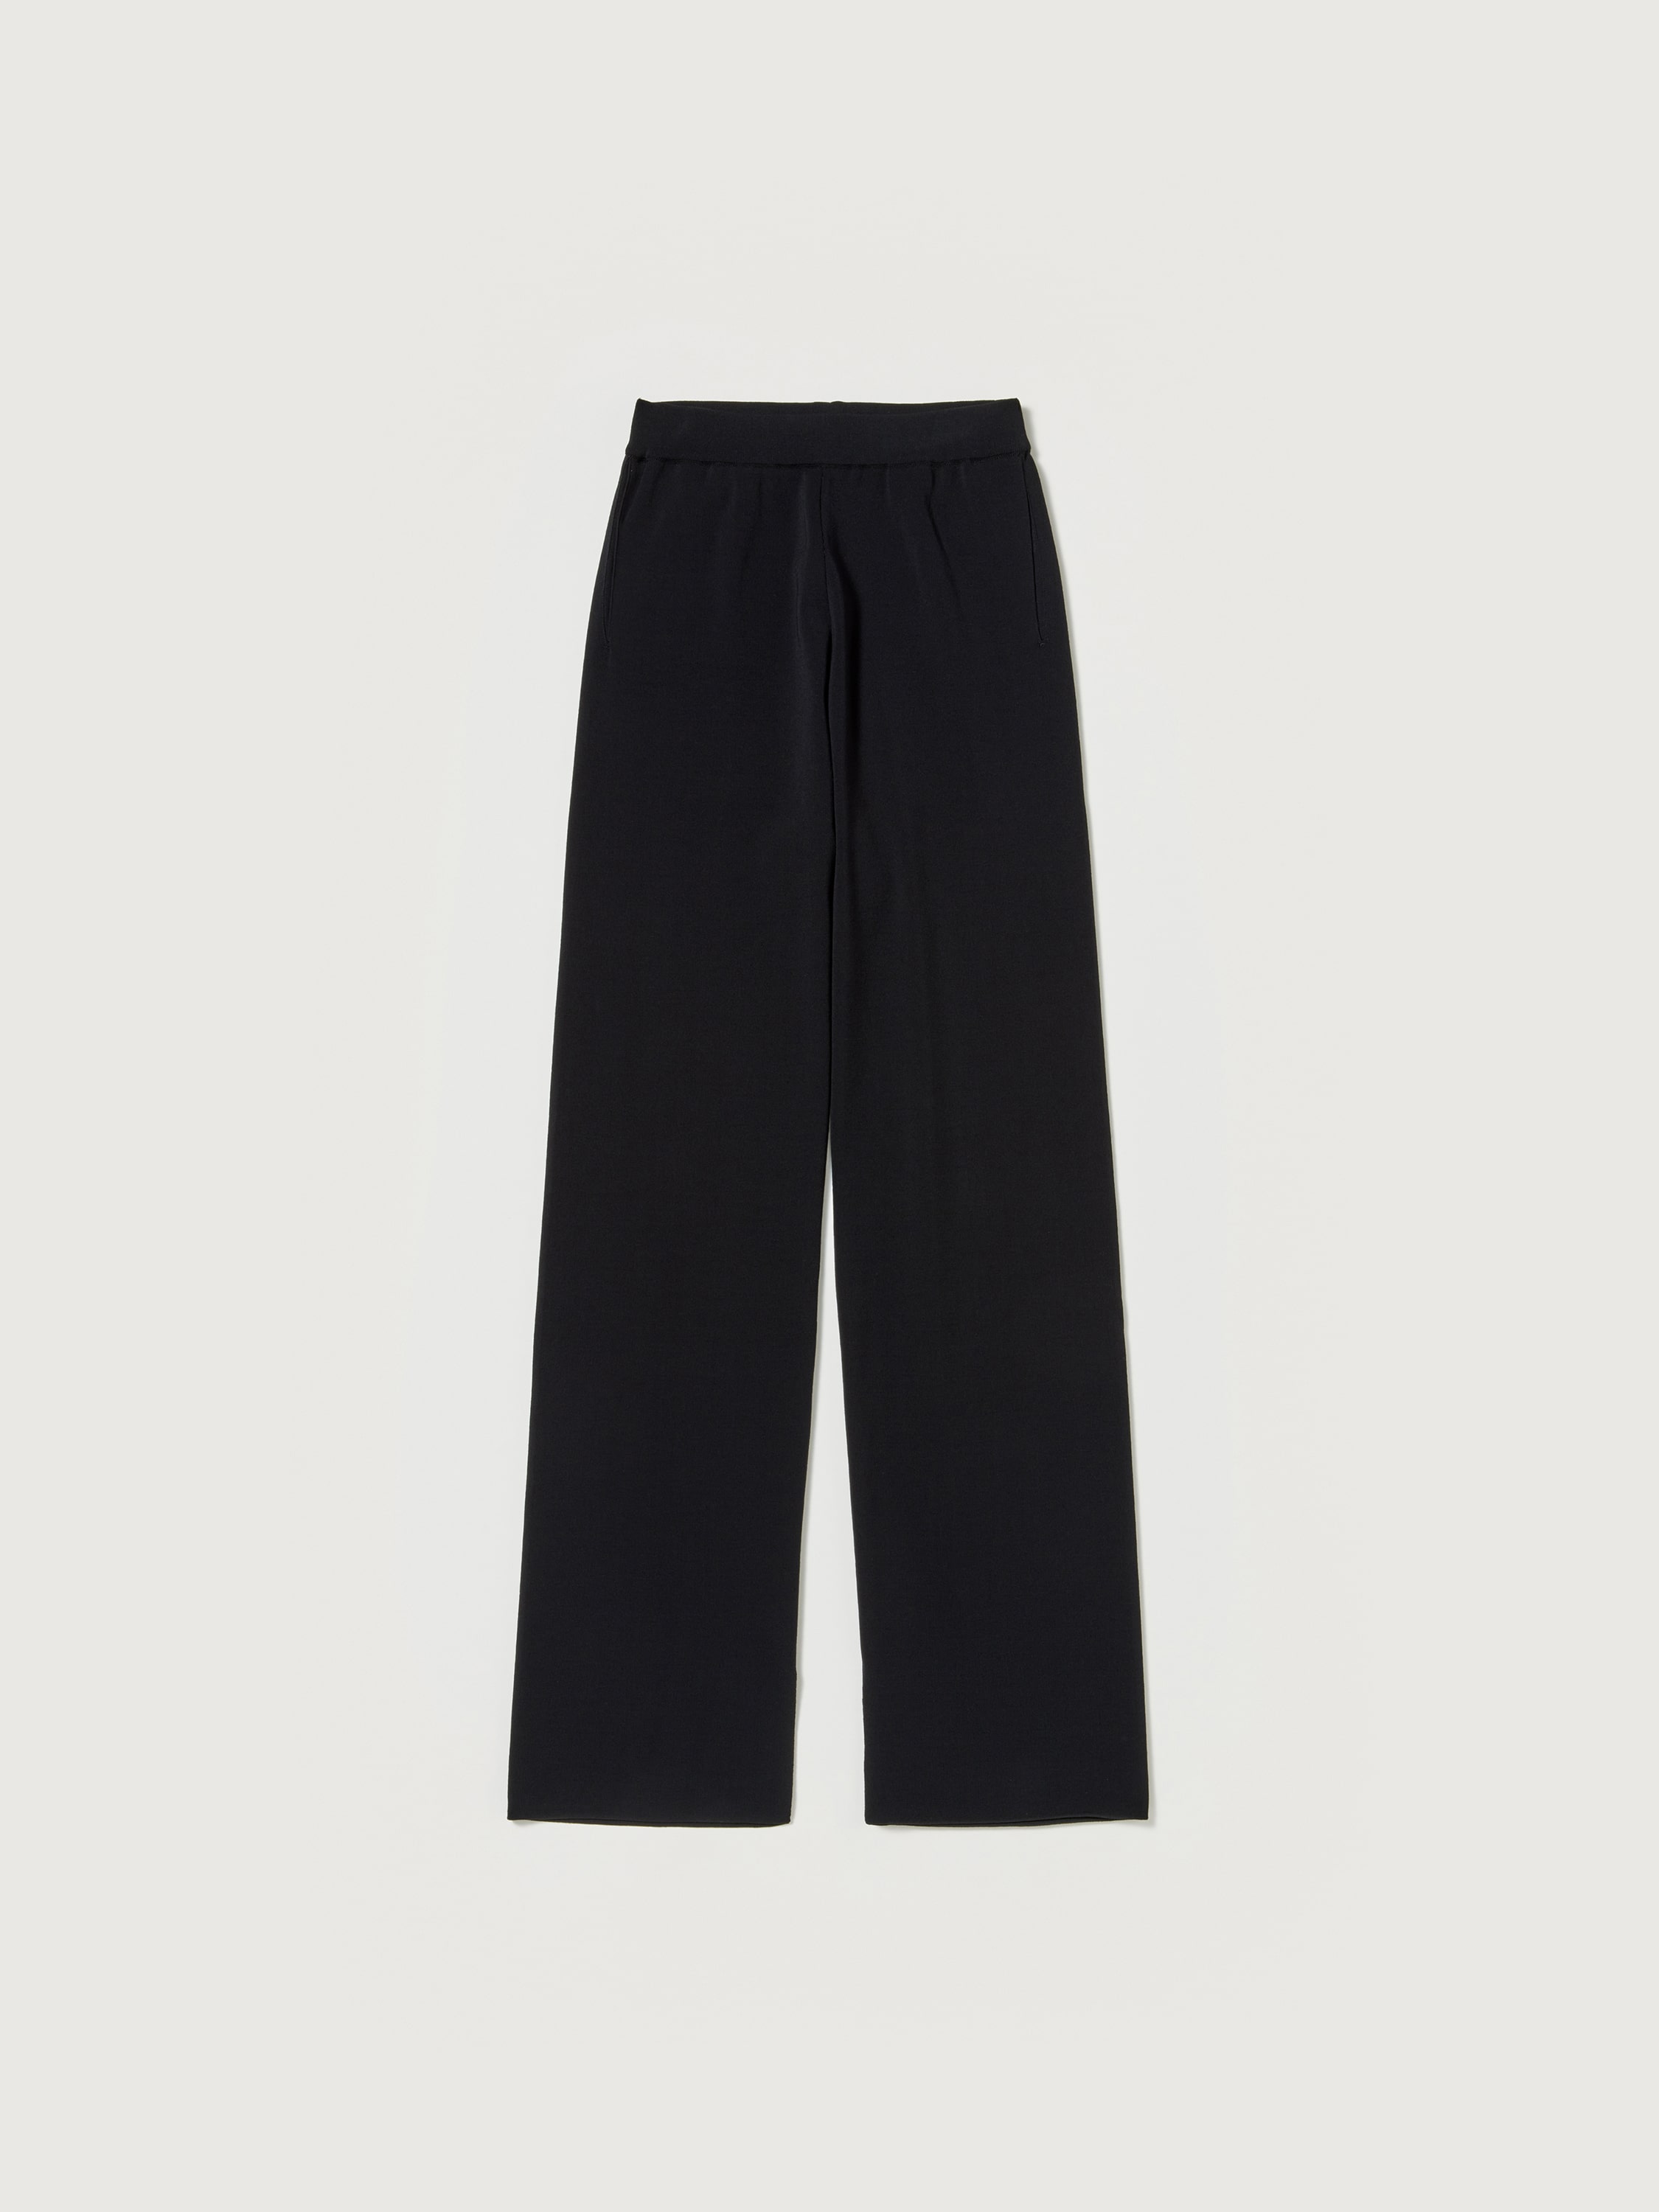 Black Mohair Pants, Hand Knit Trousers T1090 -  Sweden